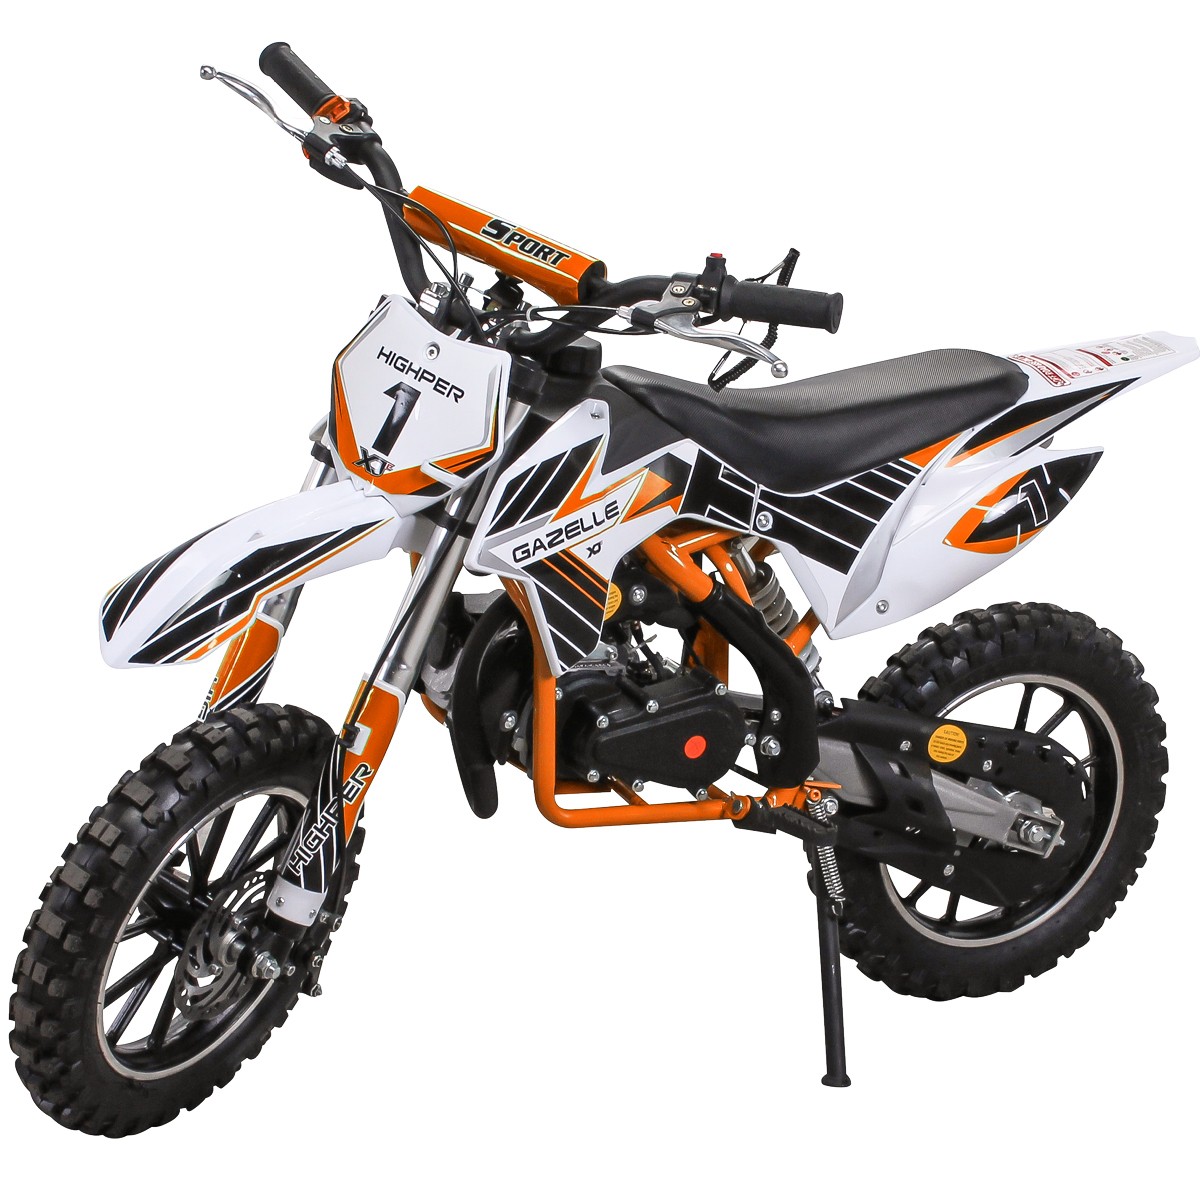 01-kinder-crossbike-orange-eactionbikes-motors-crossbike-gazelle-49-cc-startbild